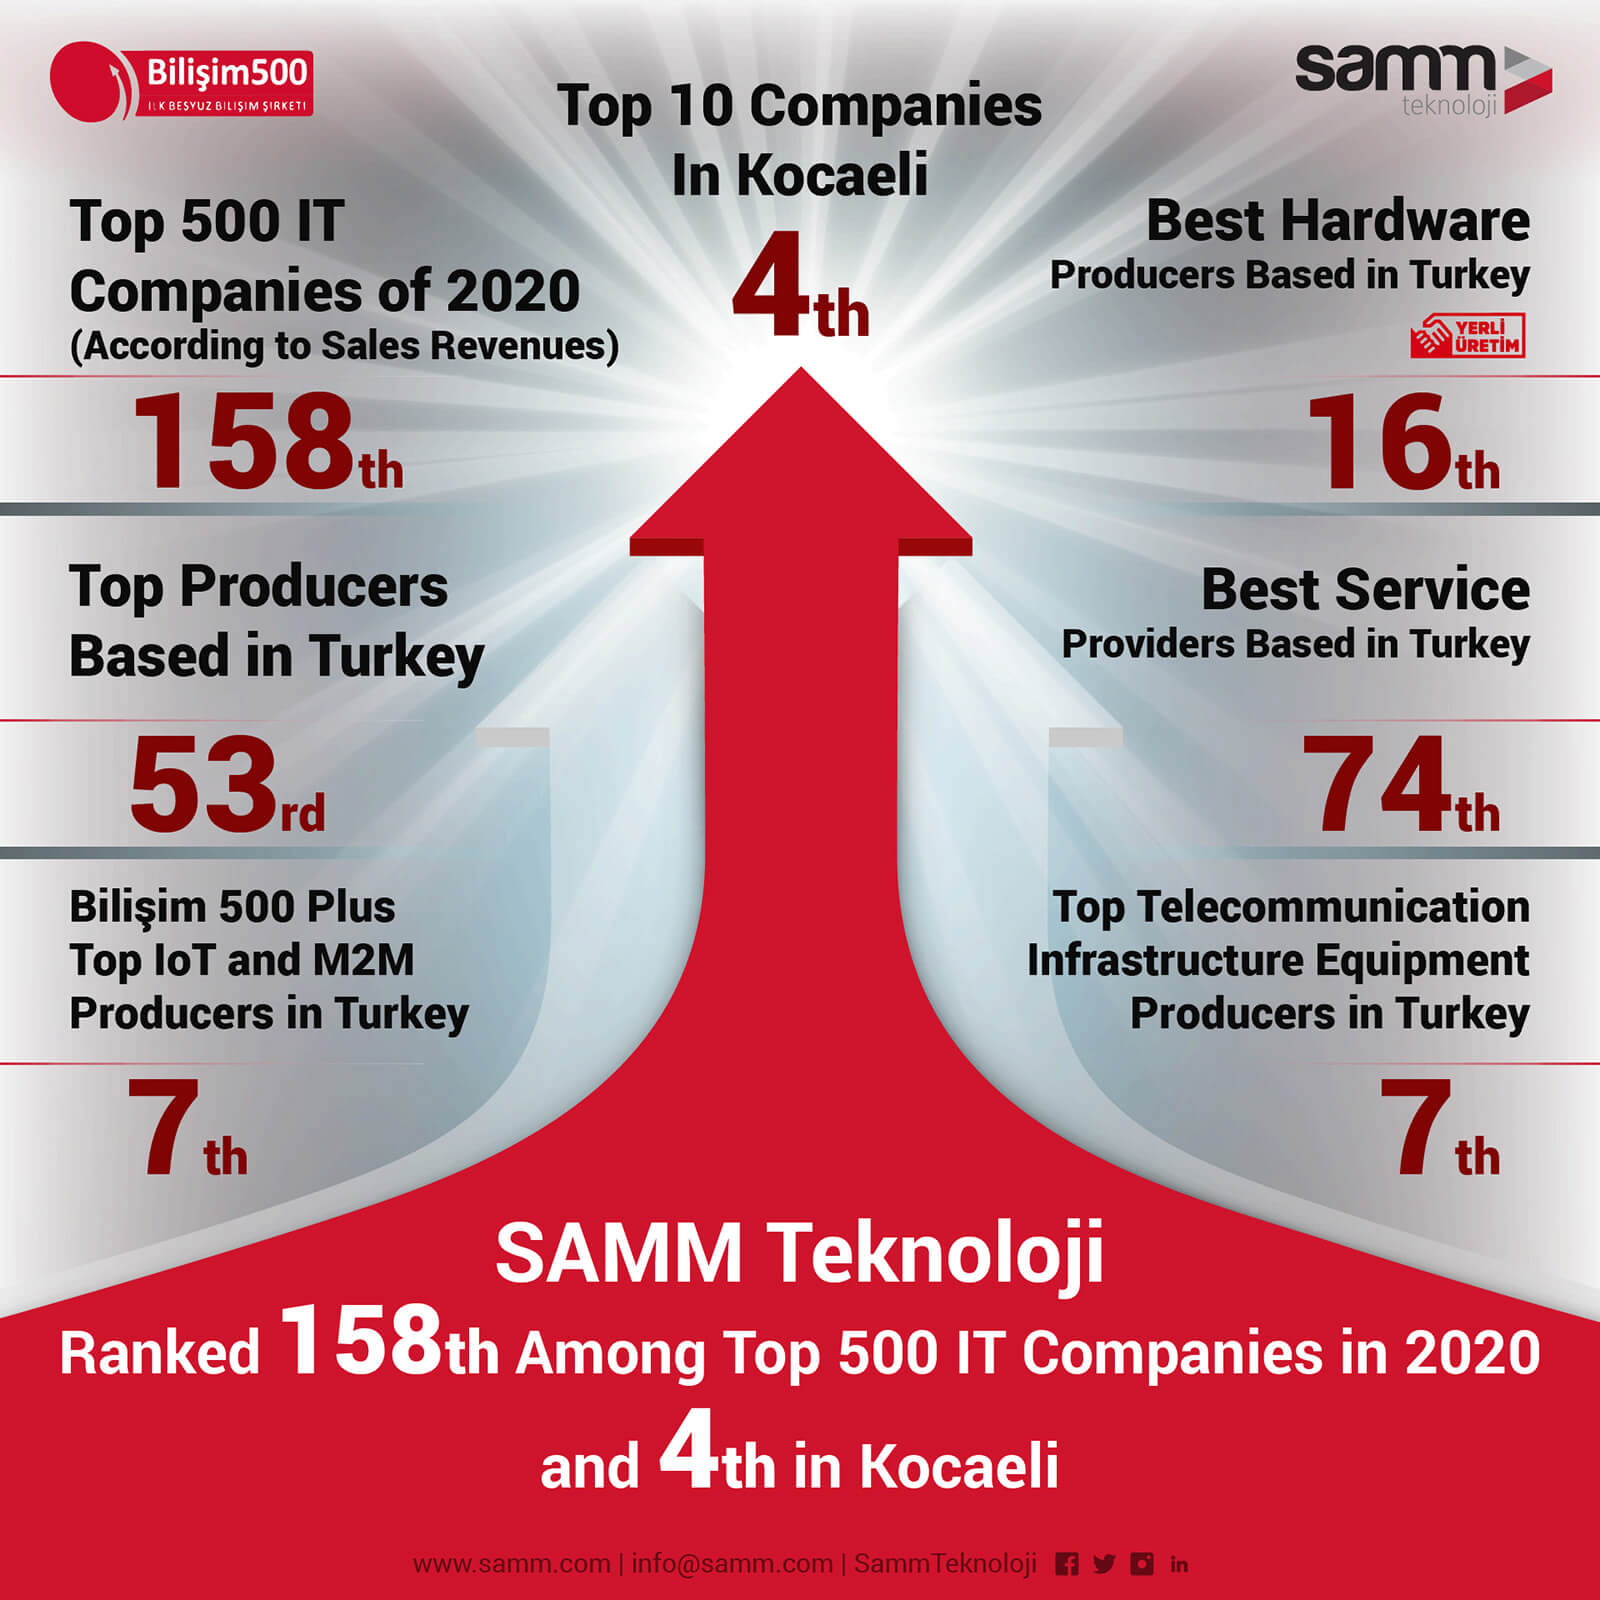 SAMM Teknoloji is Now 4th Among Top IT Companies in Kocaeli